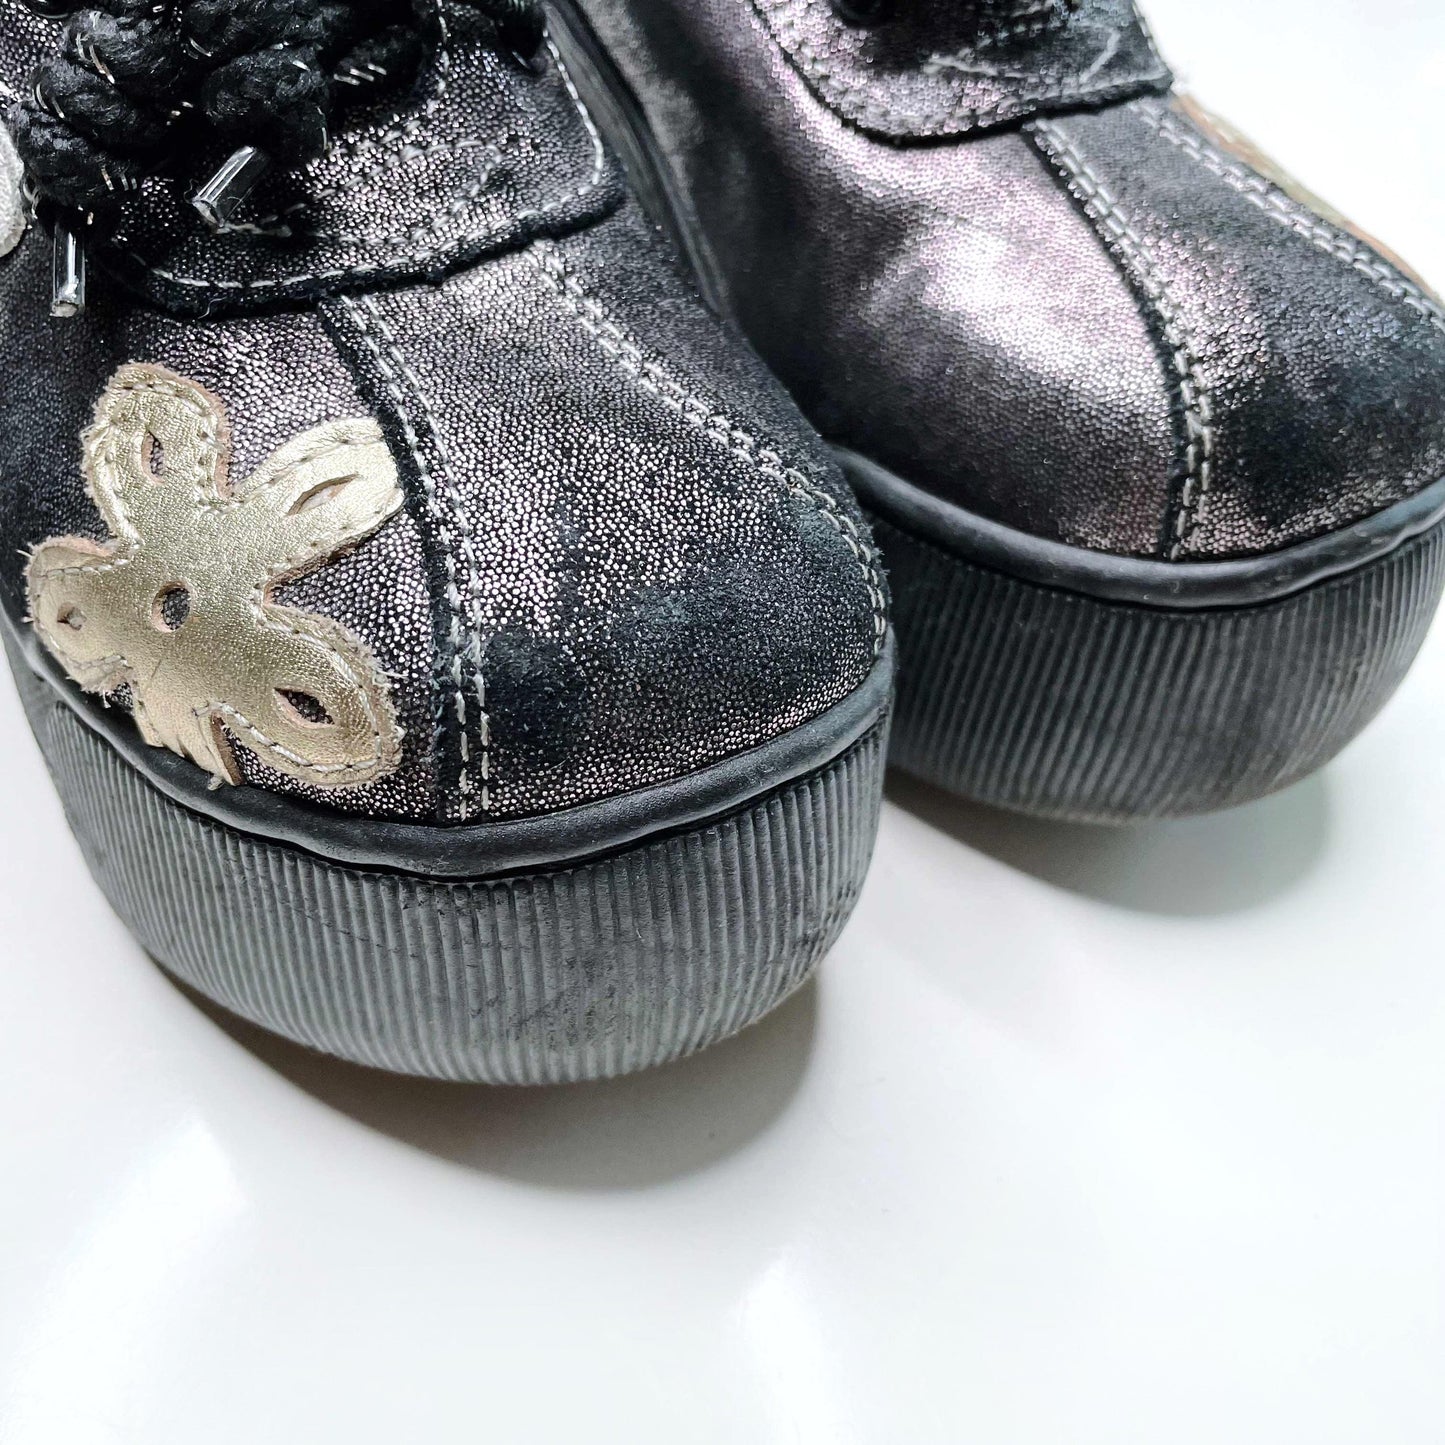 zobr italy design metallic flower platform sneaker - size 4.5